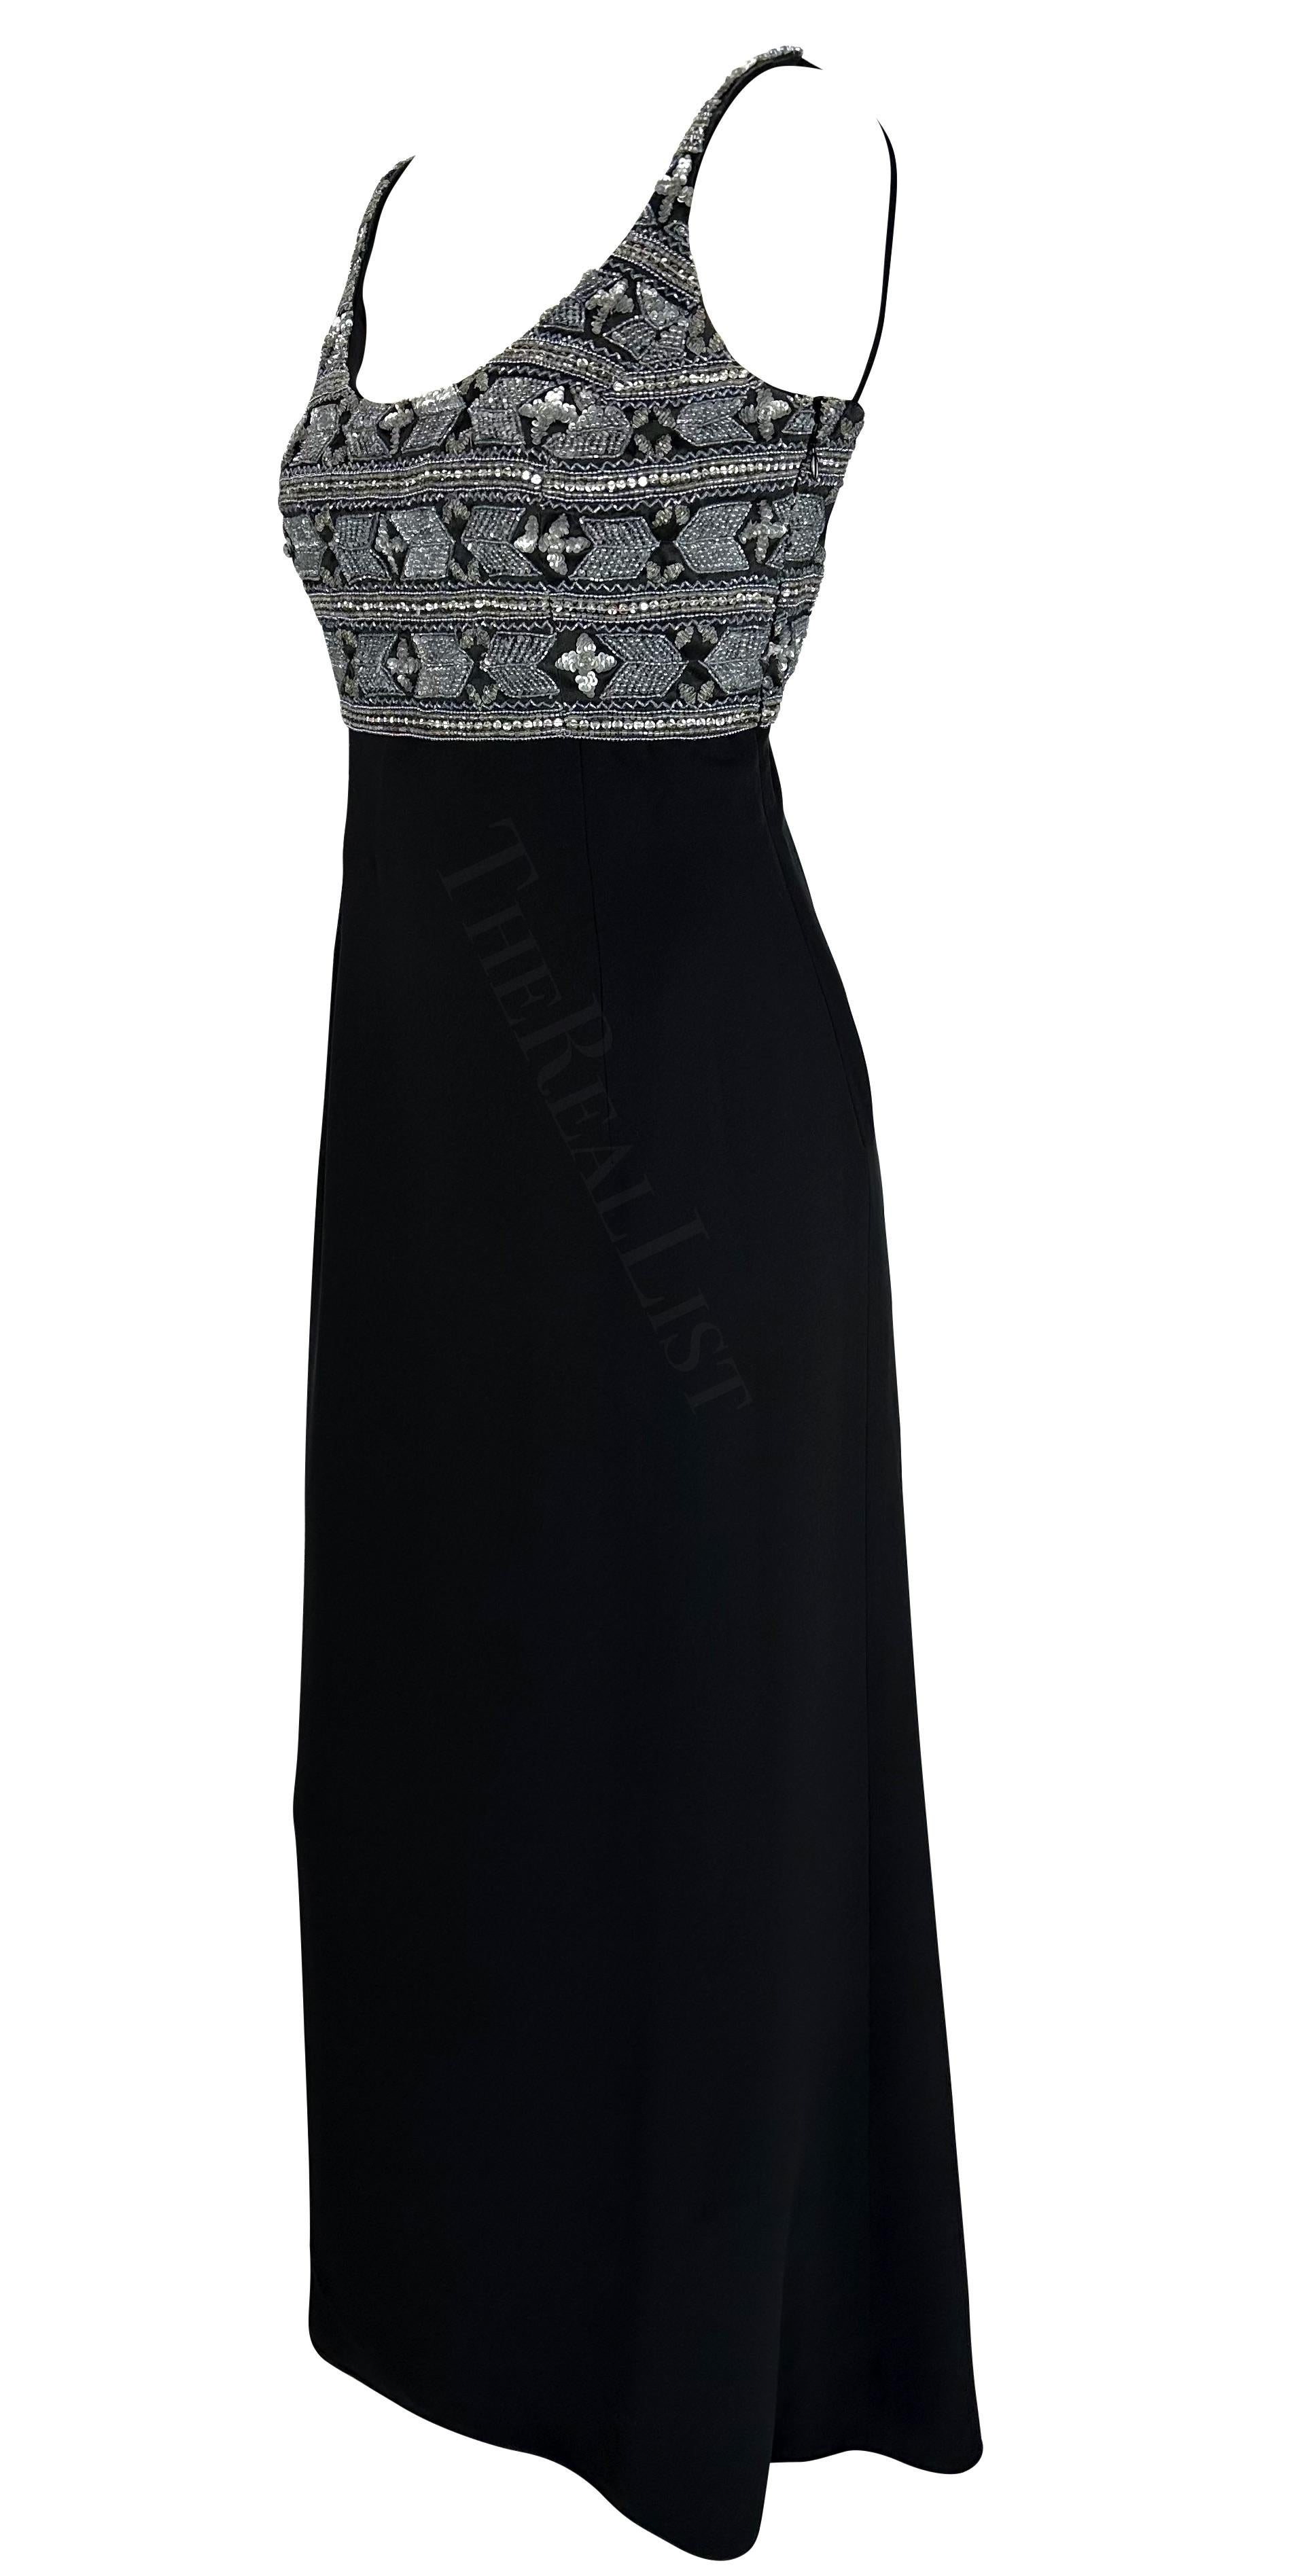 S/S 1996 Giorgio Armani Backless Black Silver Beaded Dress For Sale 2